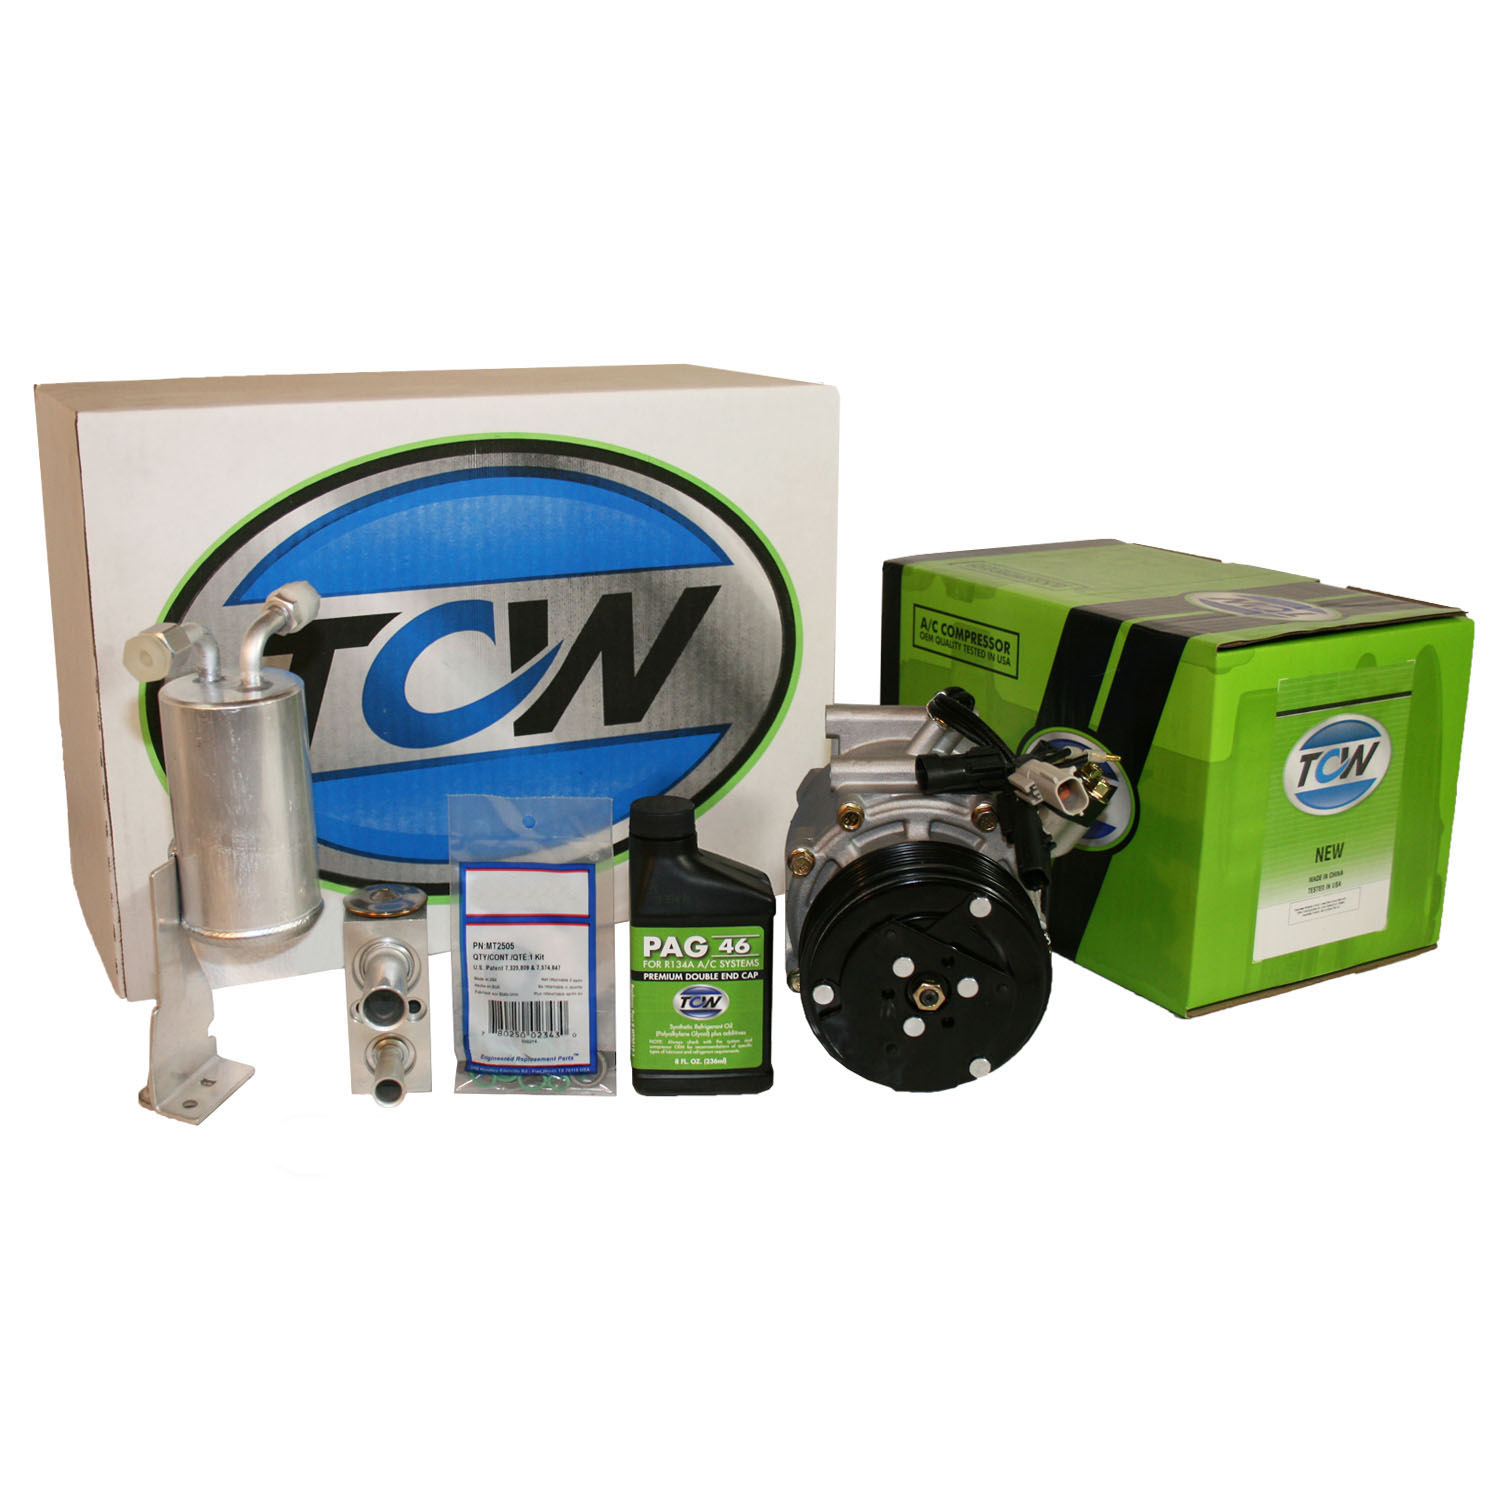 TCW Vehicle A/C Kit K1000464N New Product Image field_60b6a13a6e67c